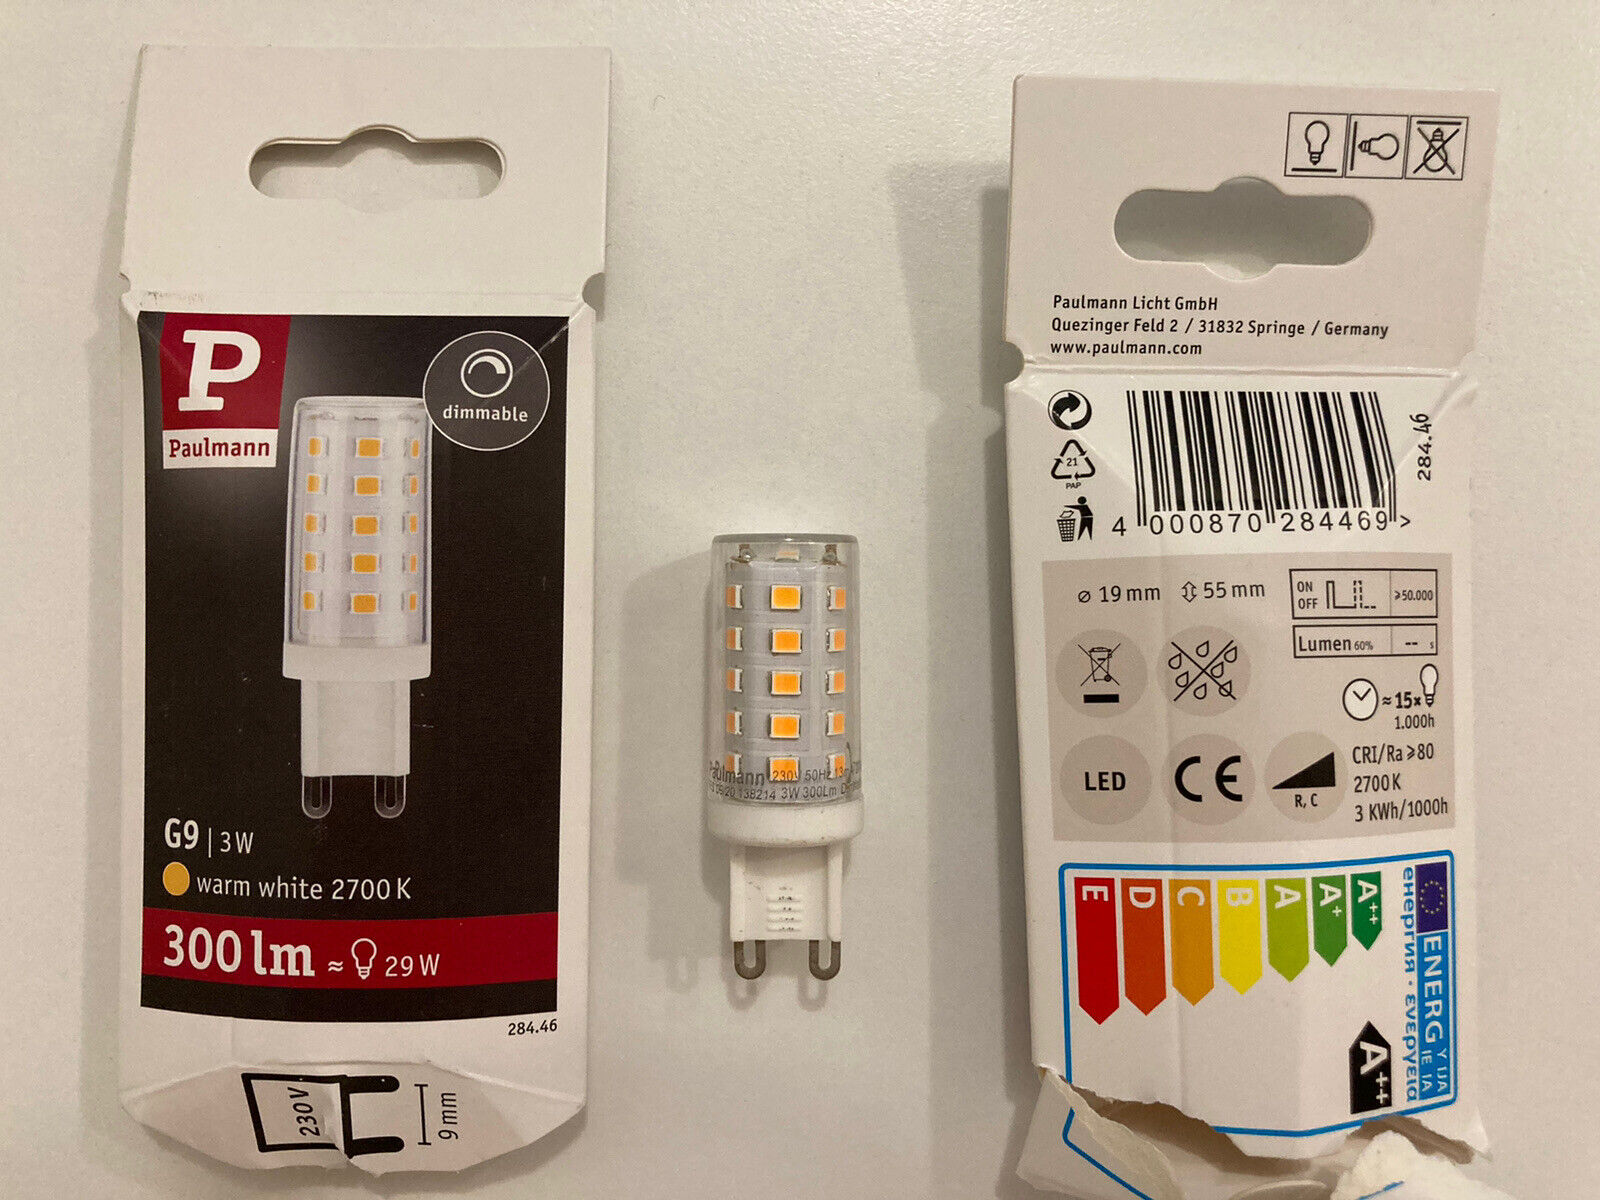 G9 Watt warm Paulmann Pin 3 - eBay - | - dimmable white 2700K LED Socket -